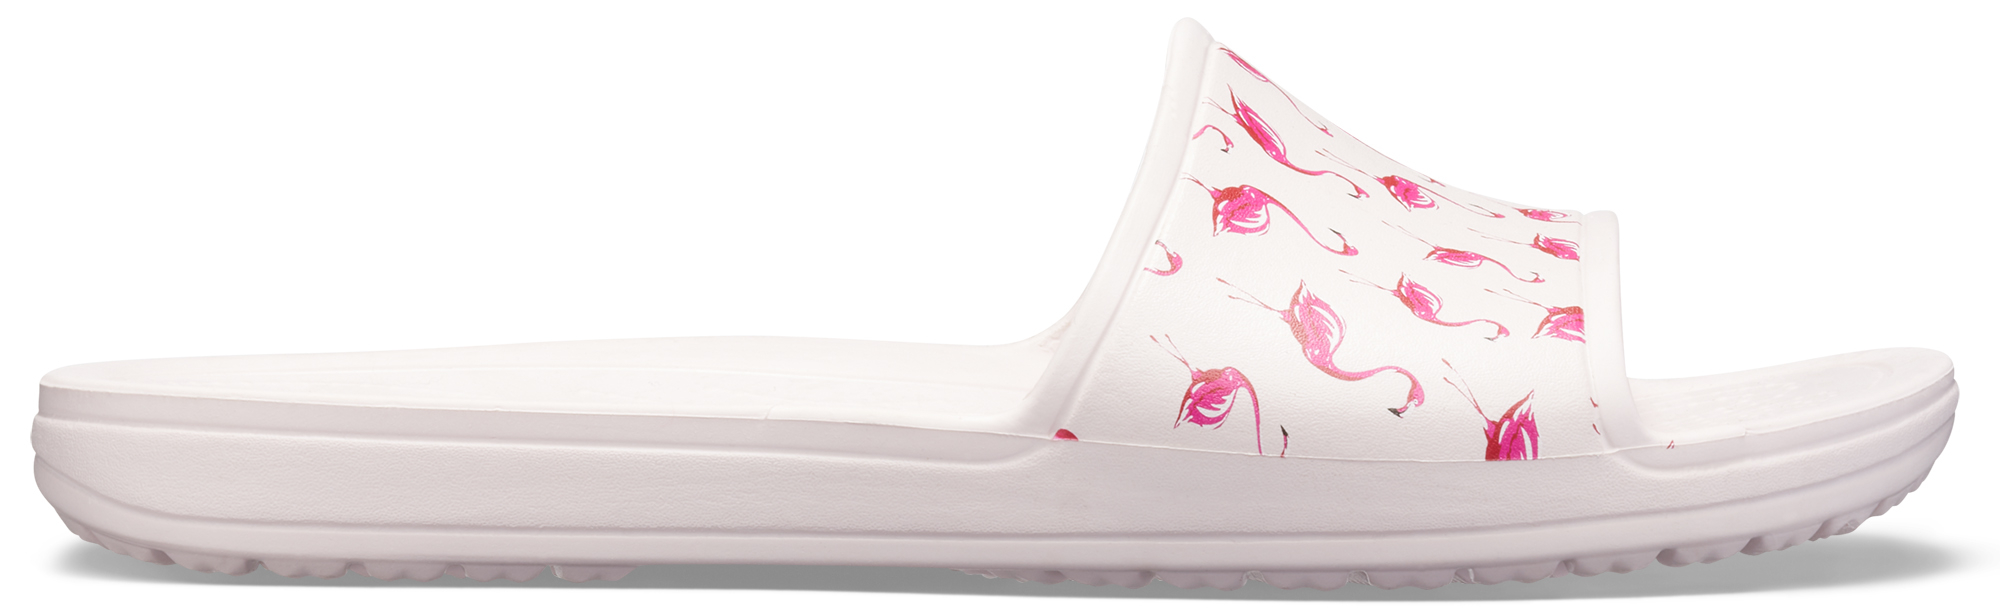 Crocs Women's Sloane SeasonalGrph Sld Slide Sandals - image 3 of 6